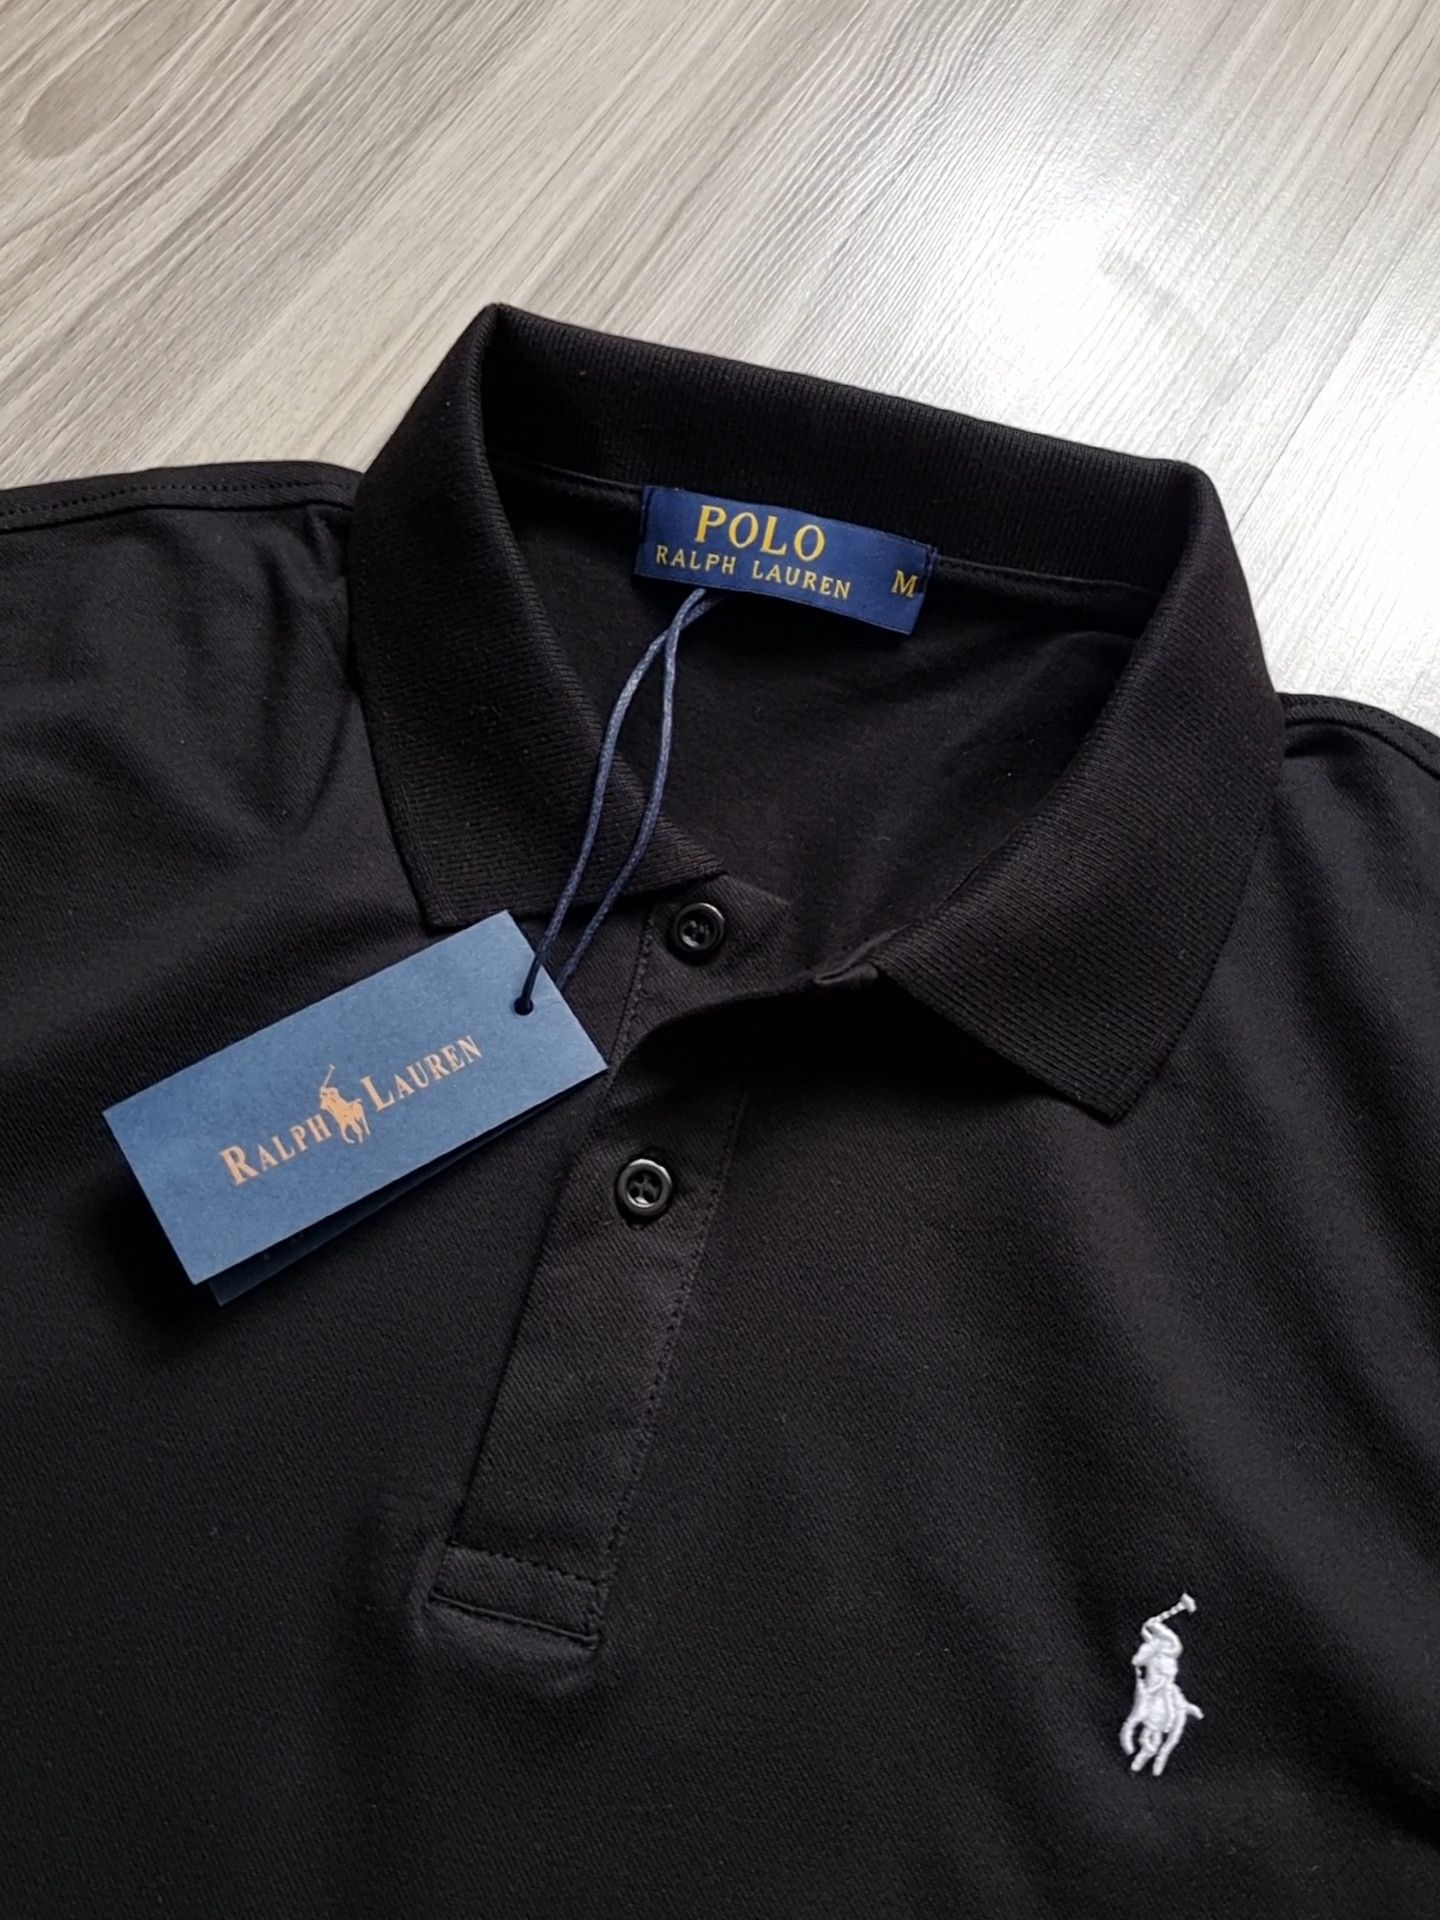 T-shirt/koszulka polo męska czarna Ralph Lauren rozmiar XXL - POLECAM!